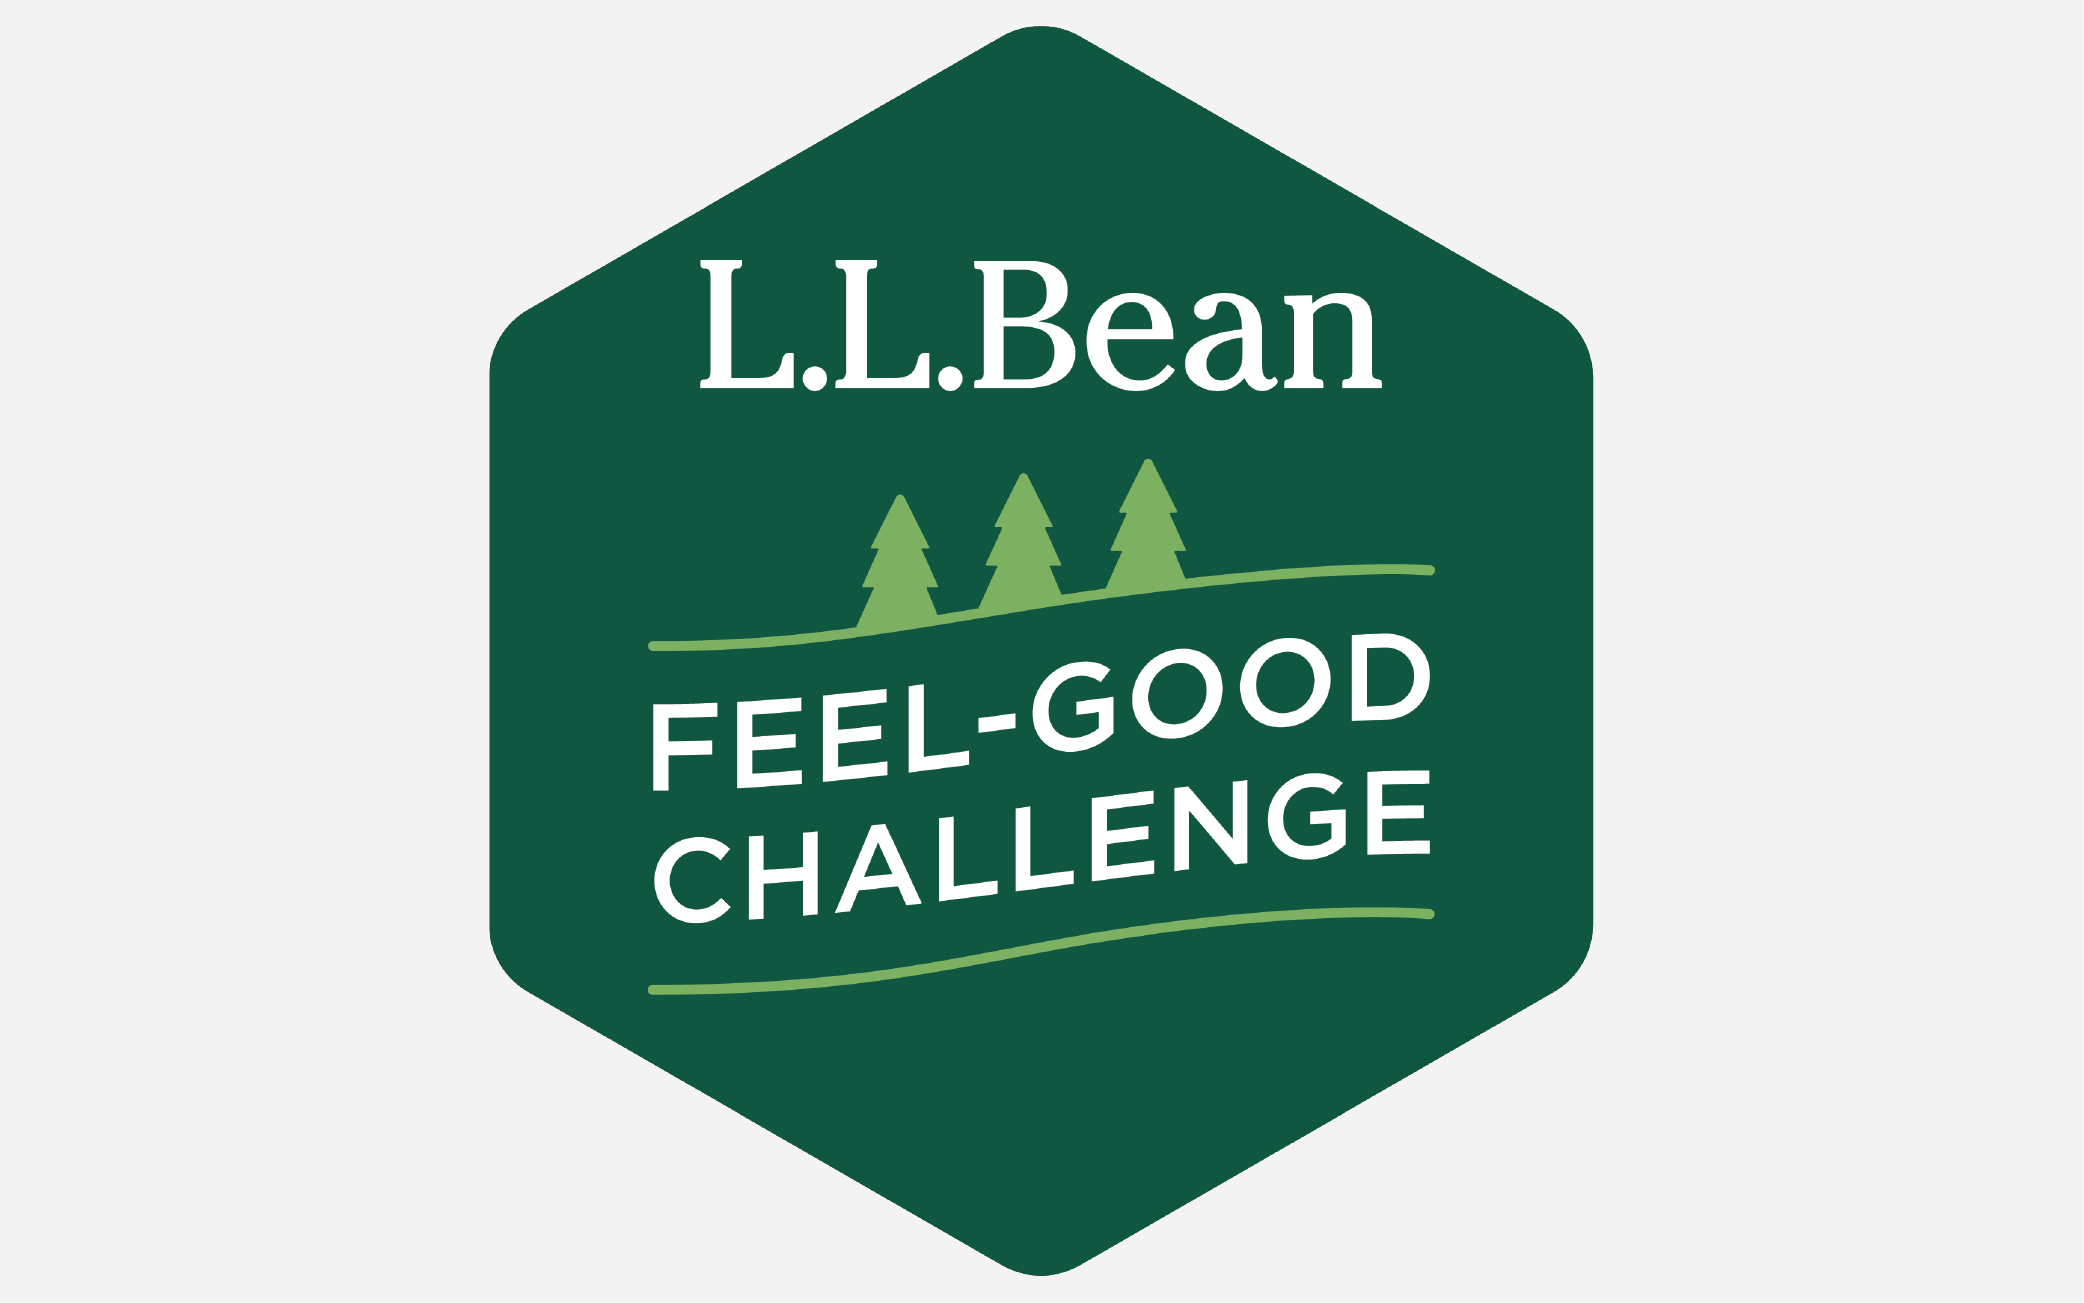 L.L. Bean Feel-Good Challenge